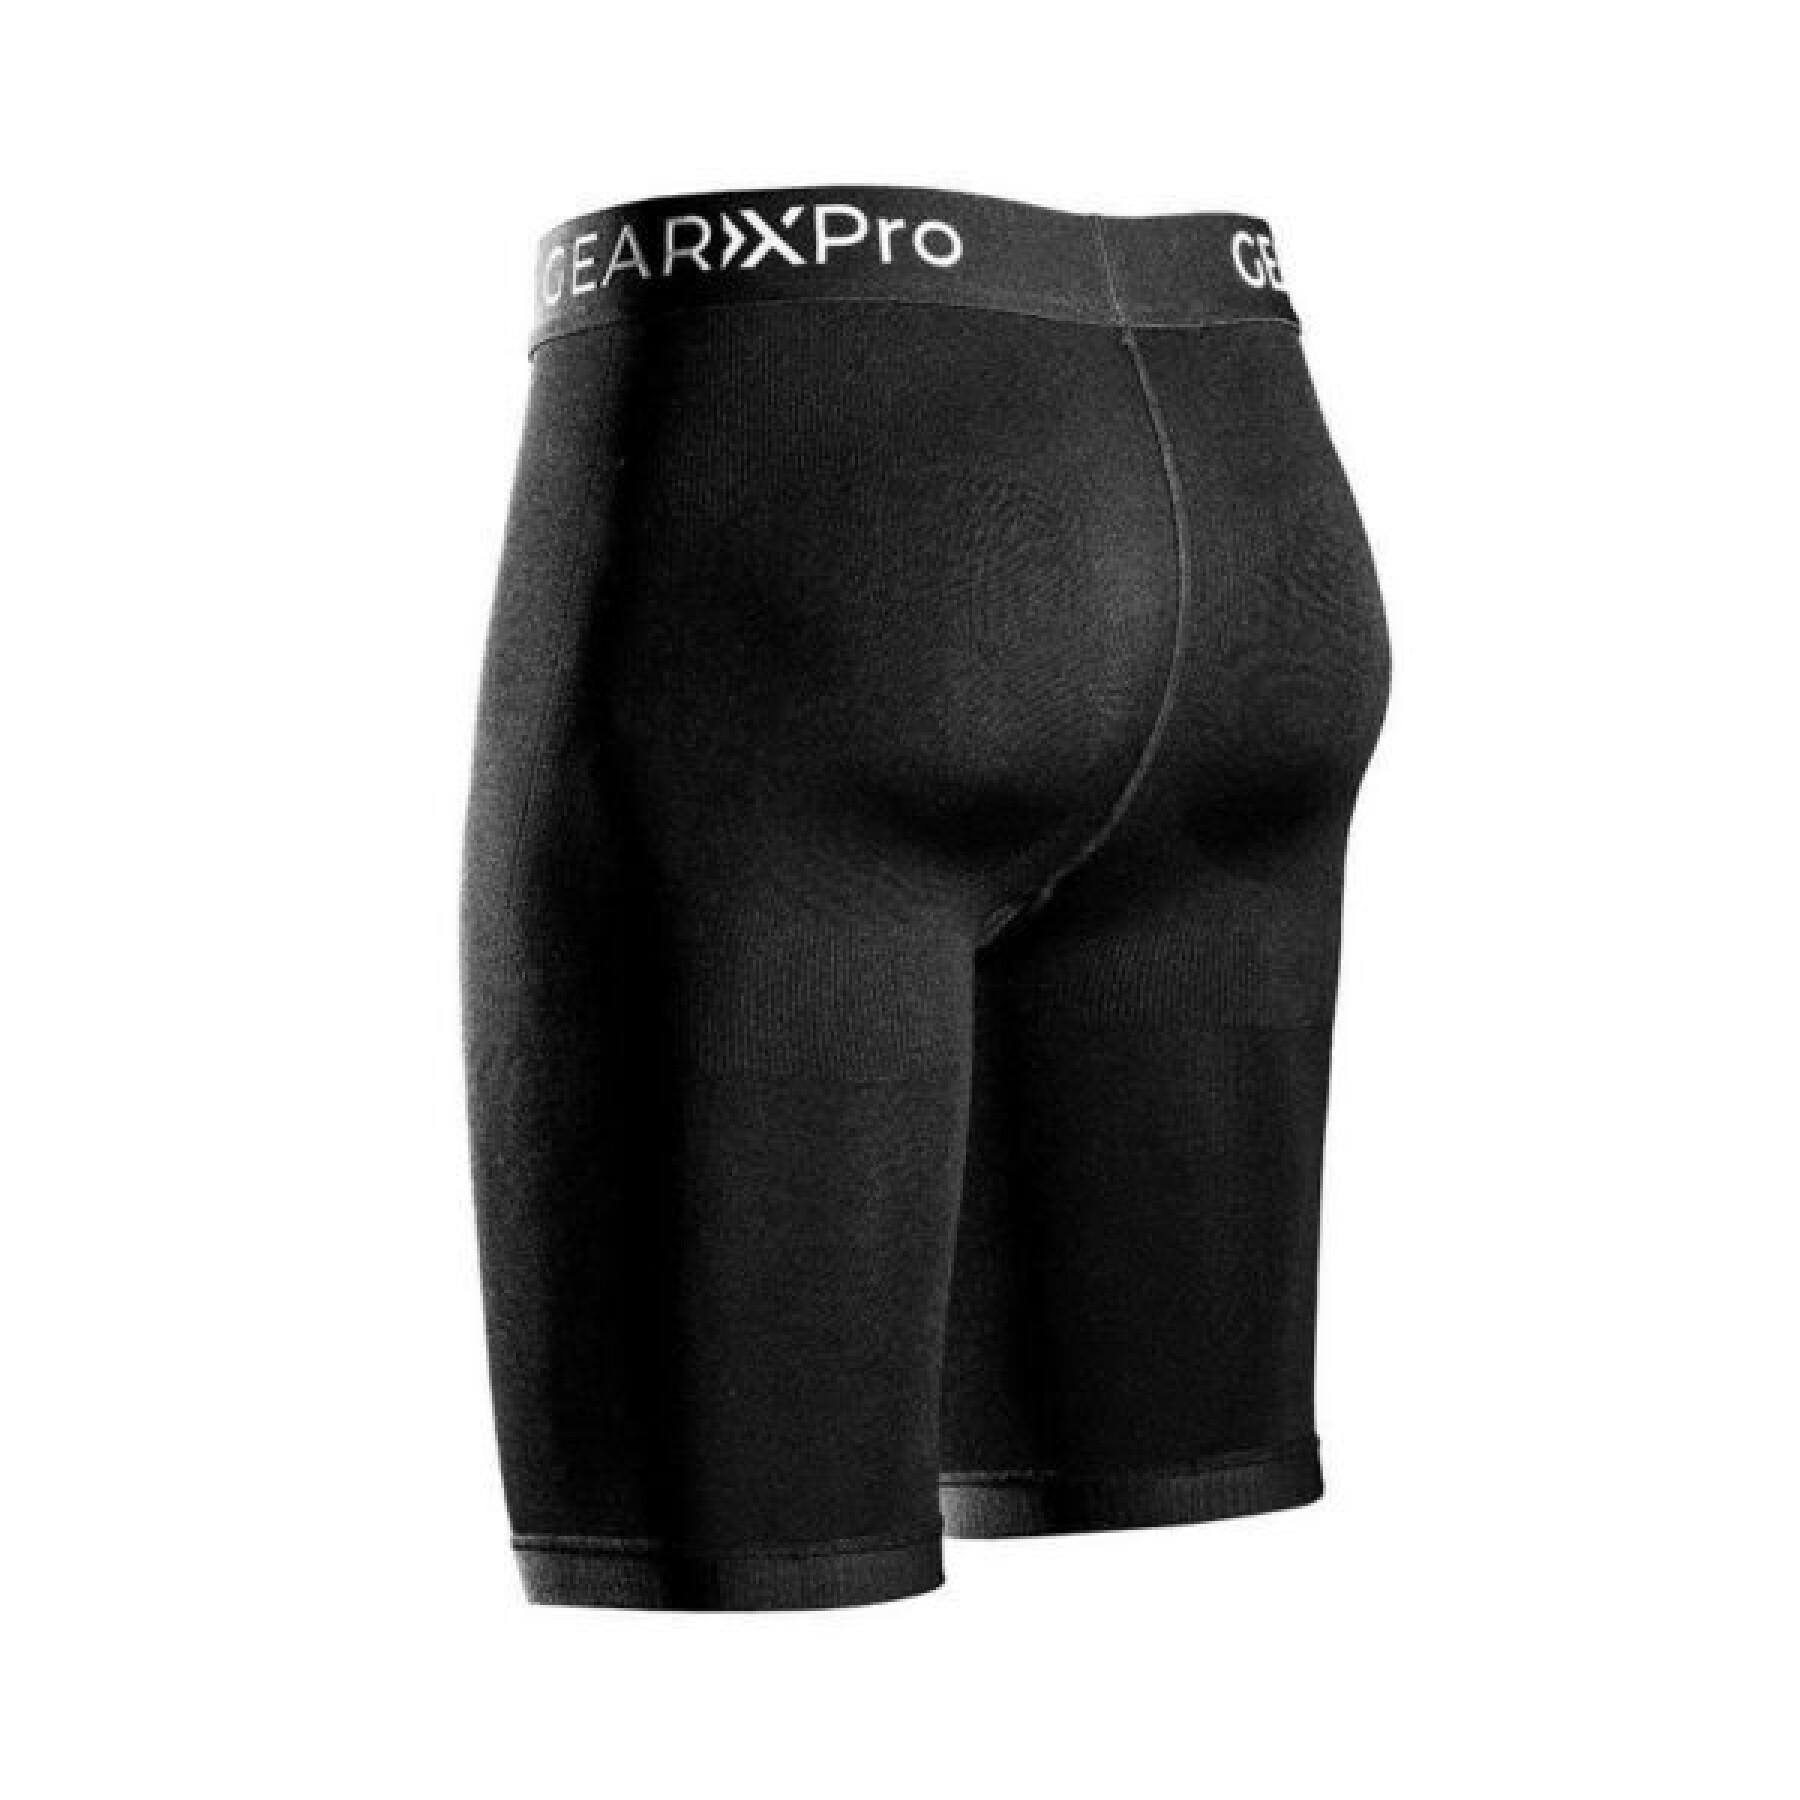 Pantalones cortos Gearxpro Recovery